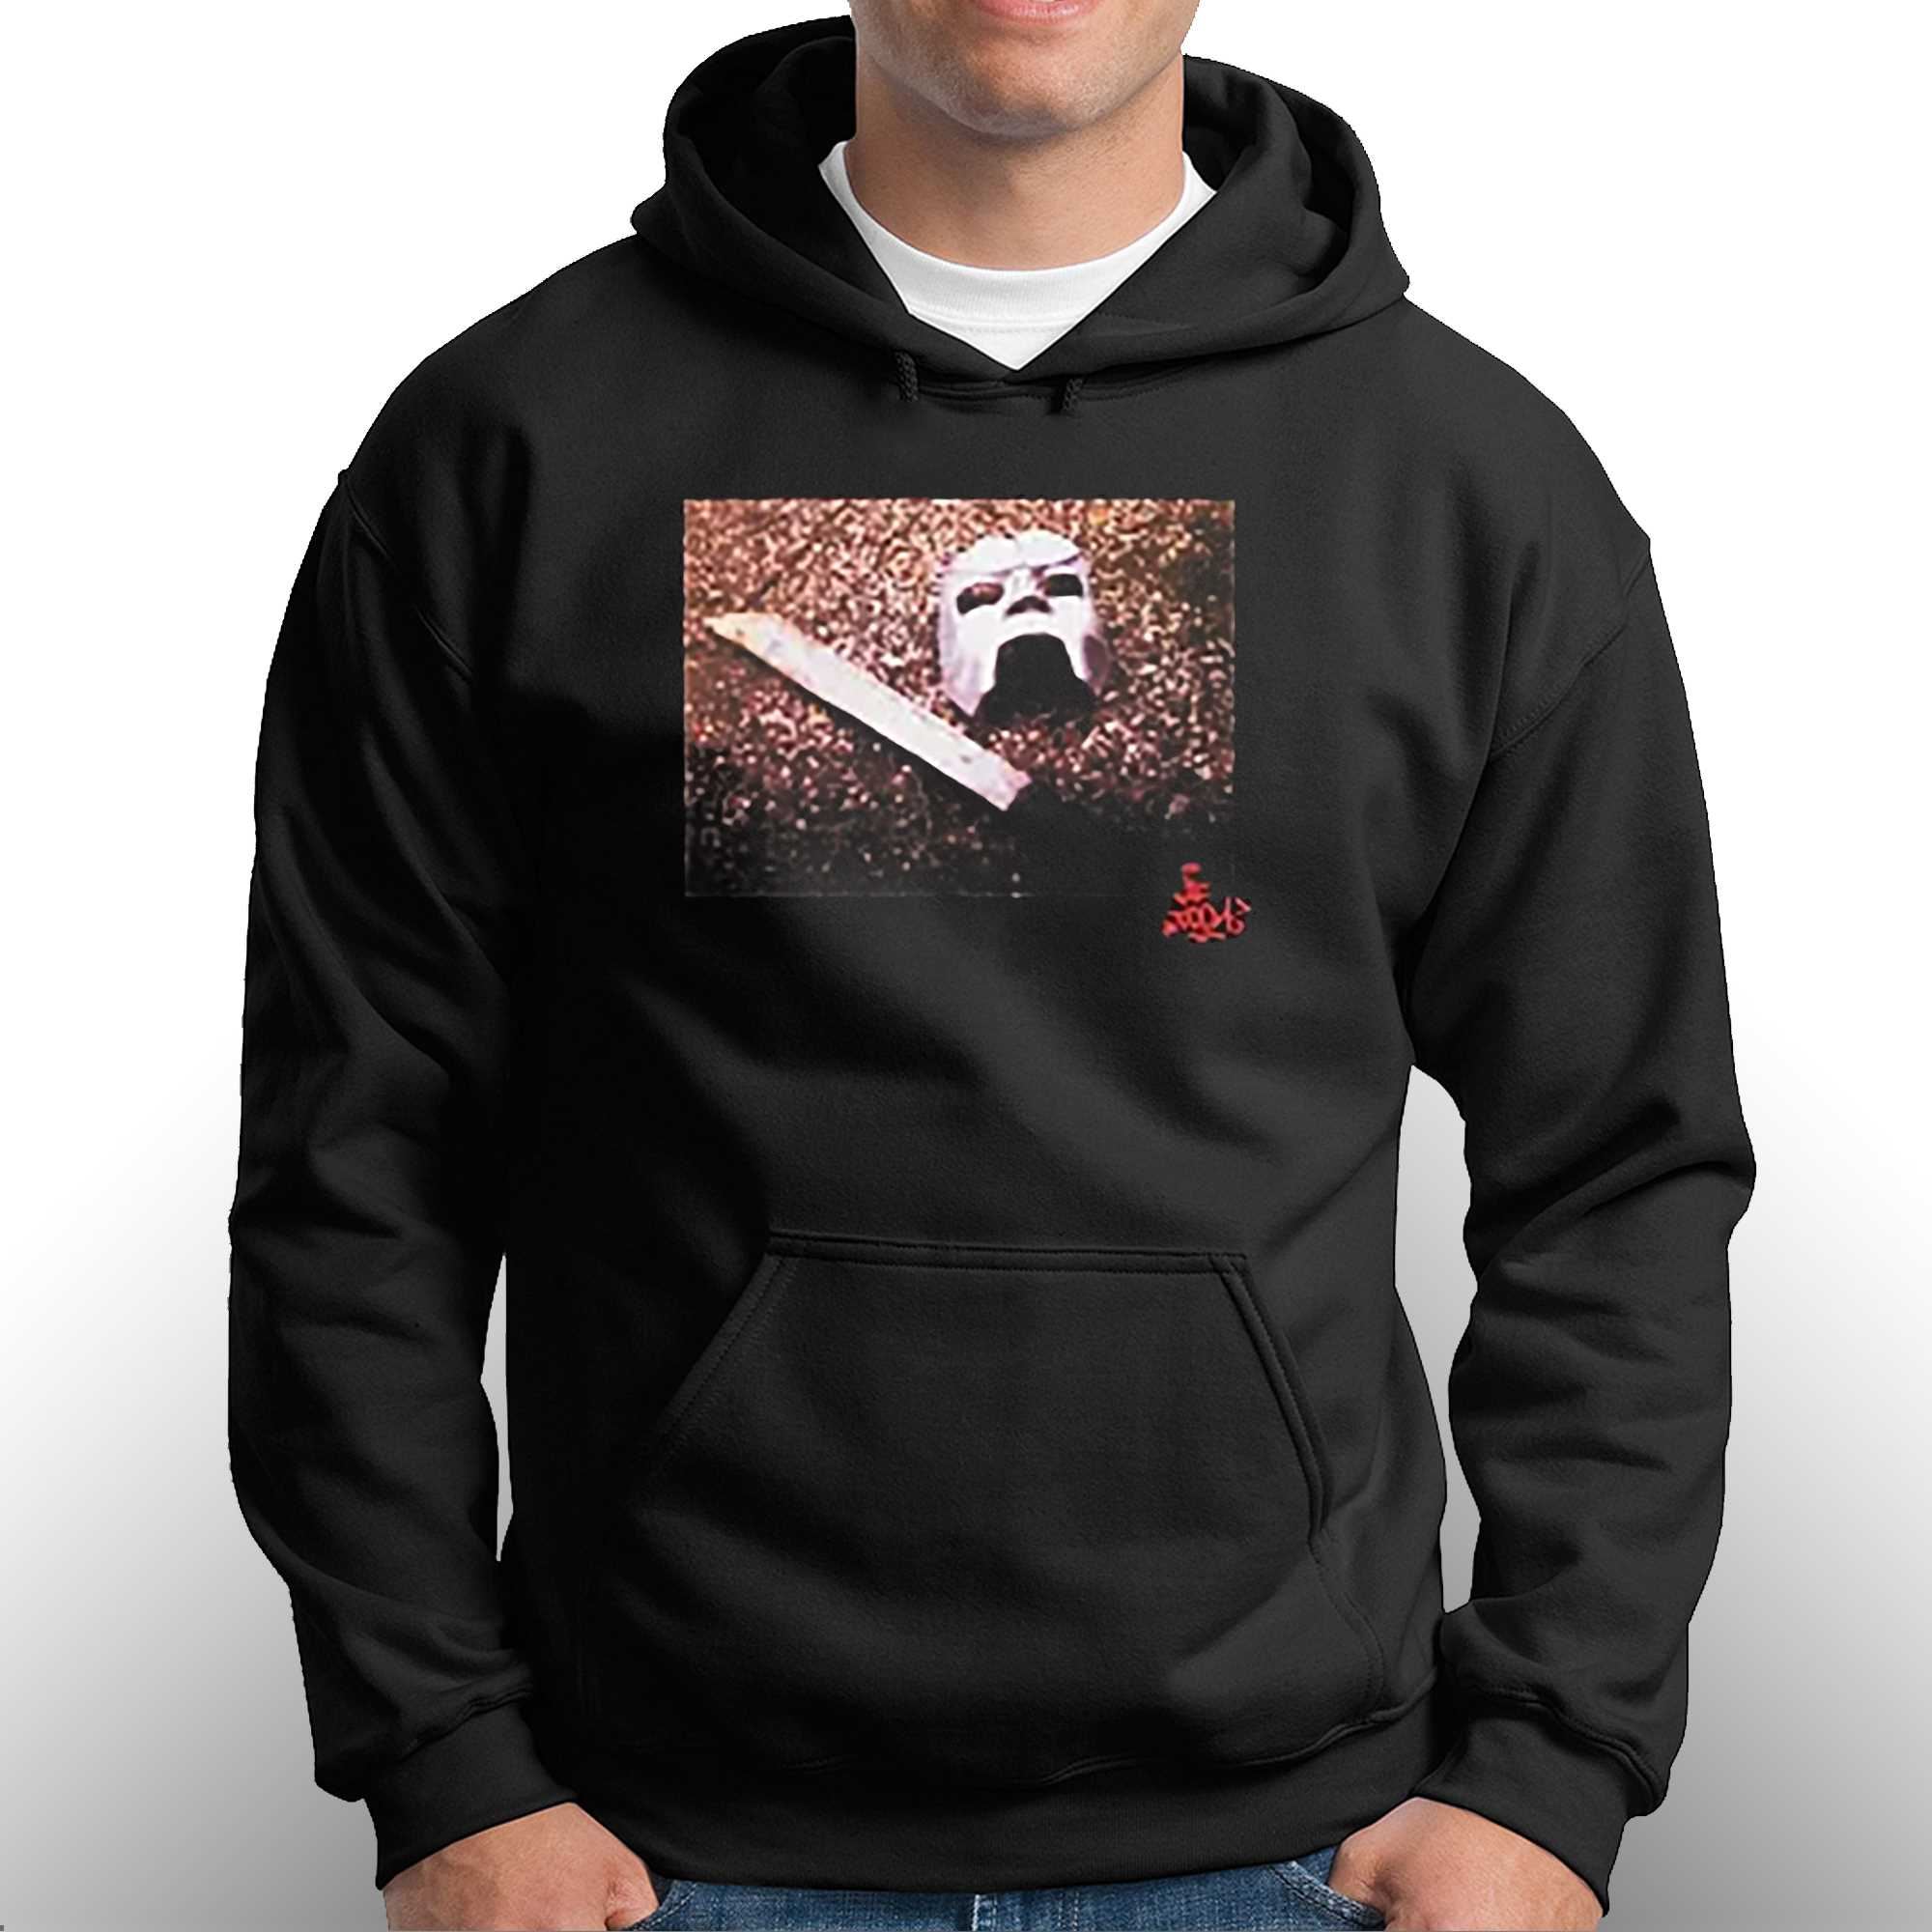 Supreme Mf Doom Hooded Sweatshirt - Shibtee Clothing